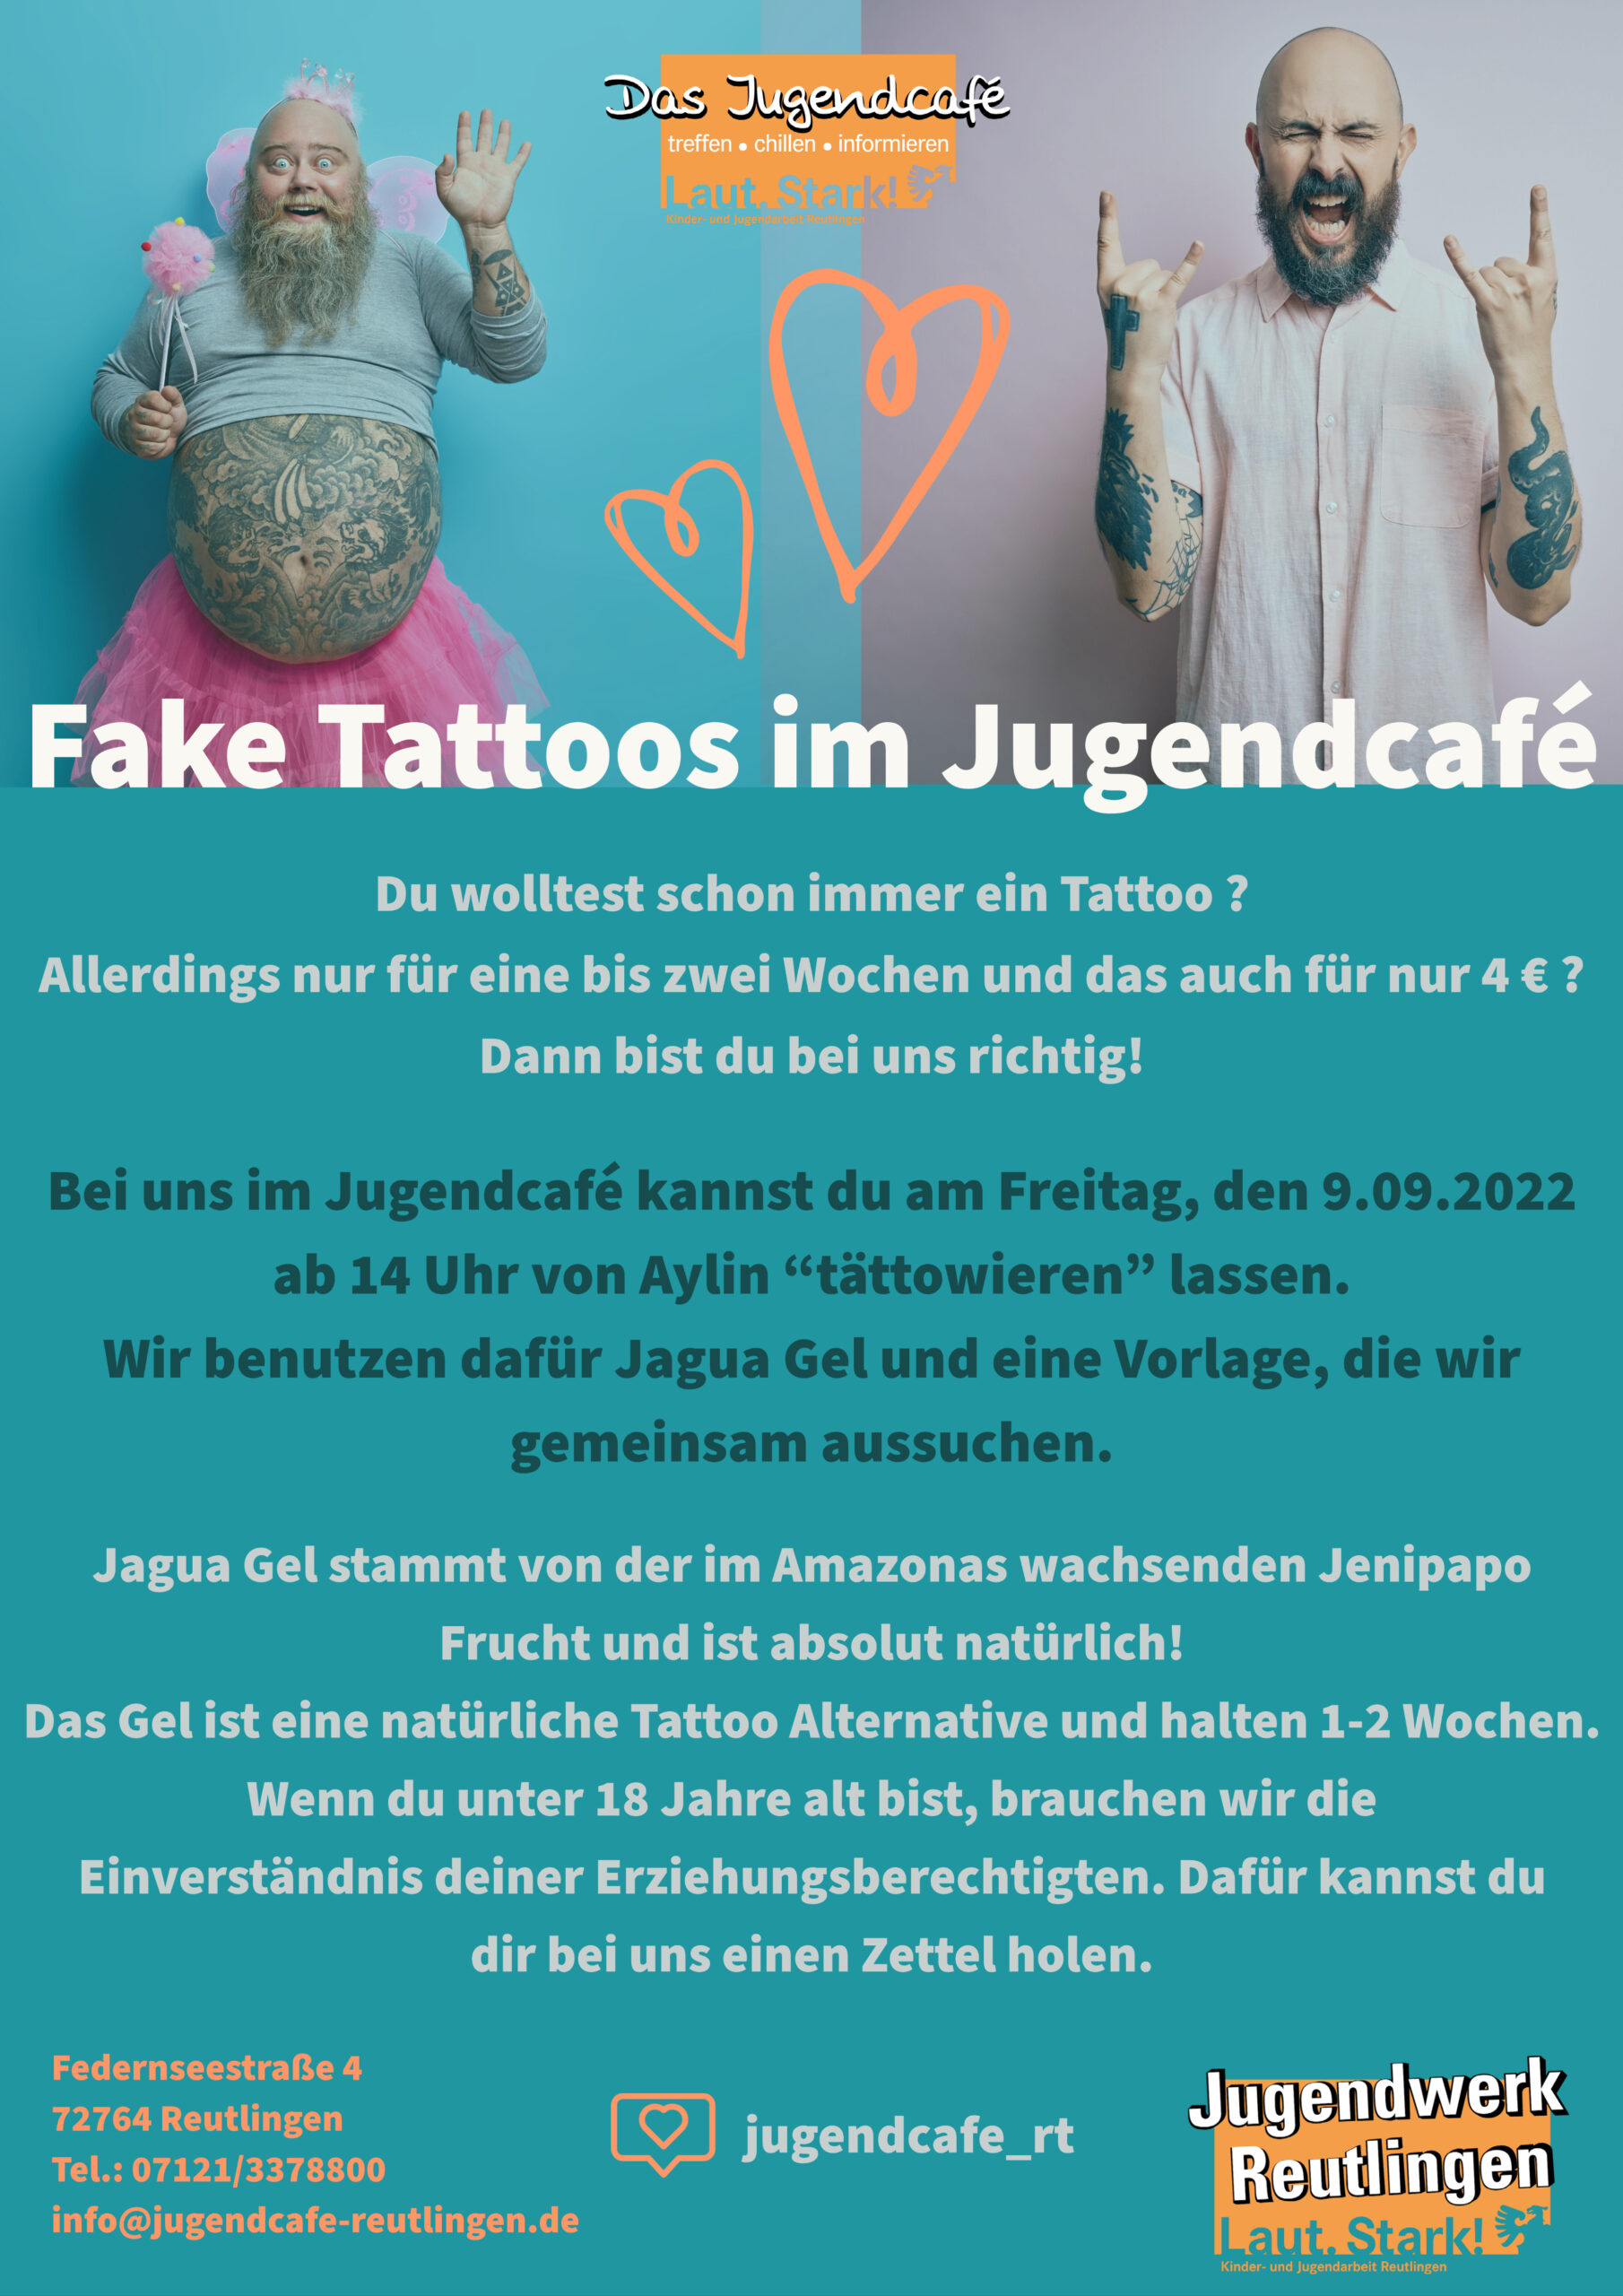 (Fake) Tattoos im Jugendcafé